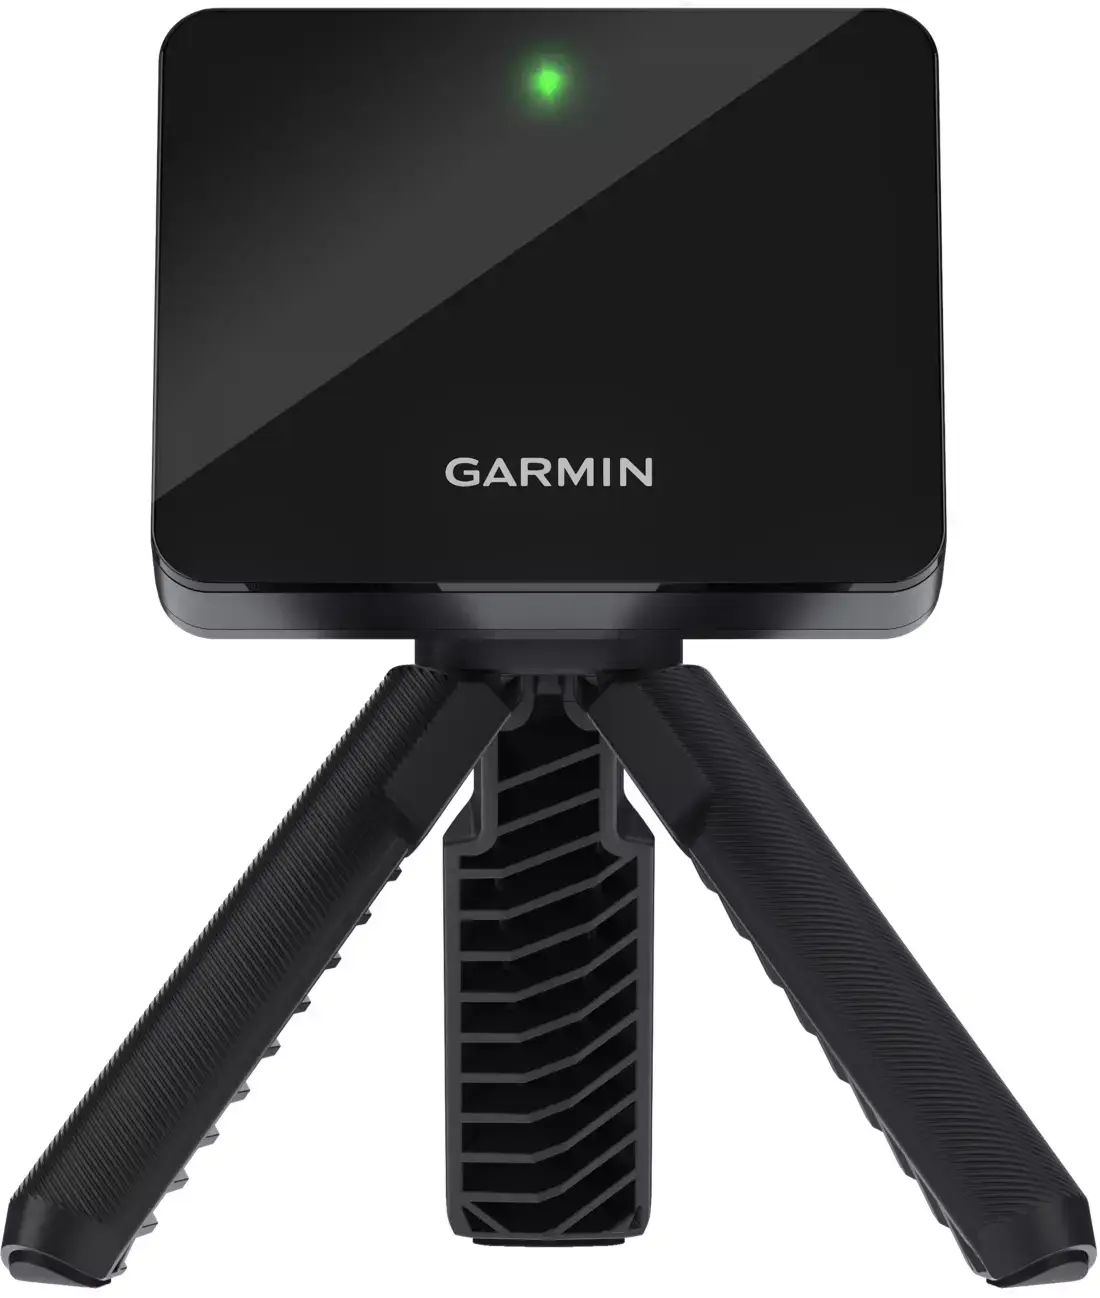 Garmin Approach R10 Golf Launch Monitor Review